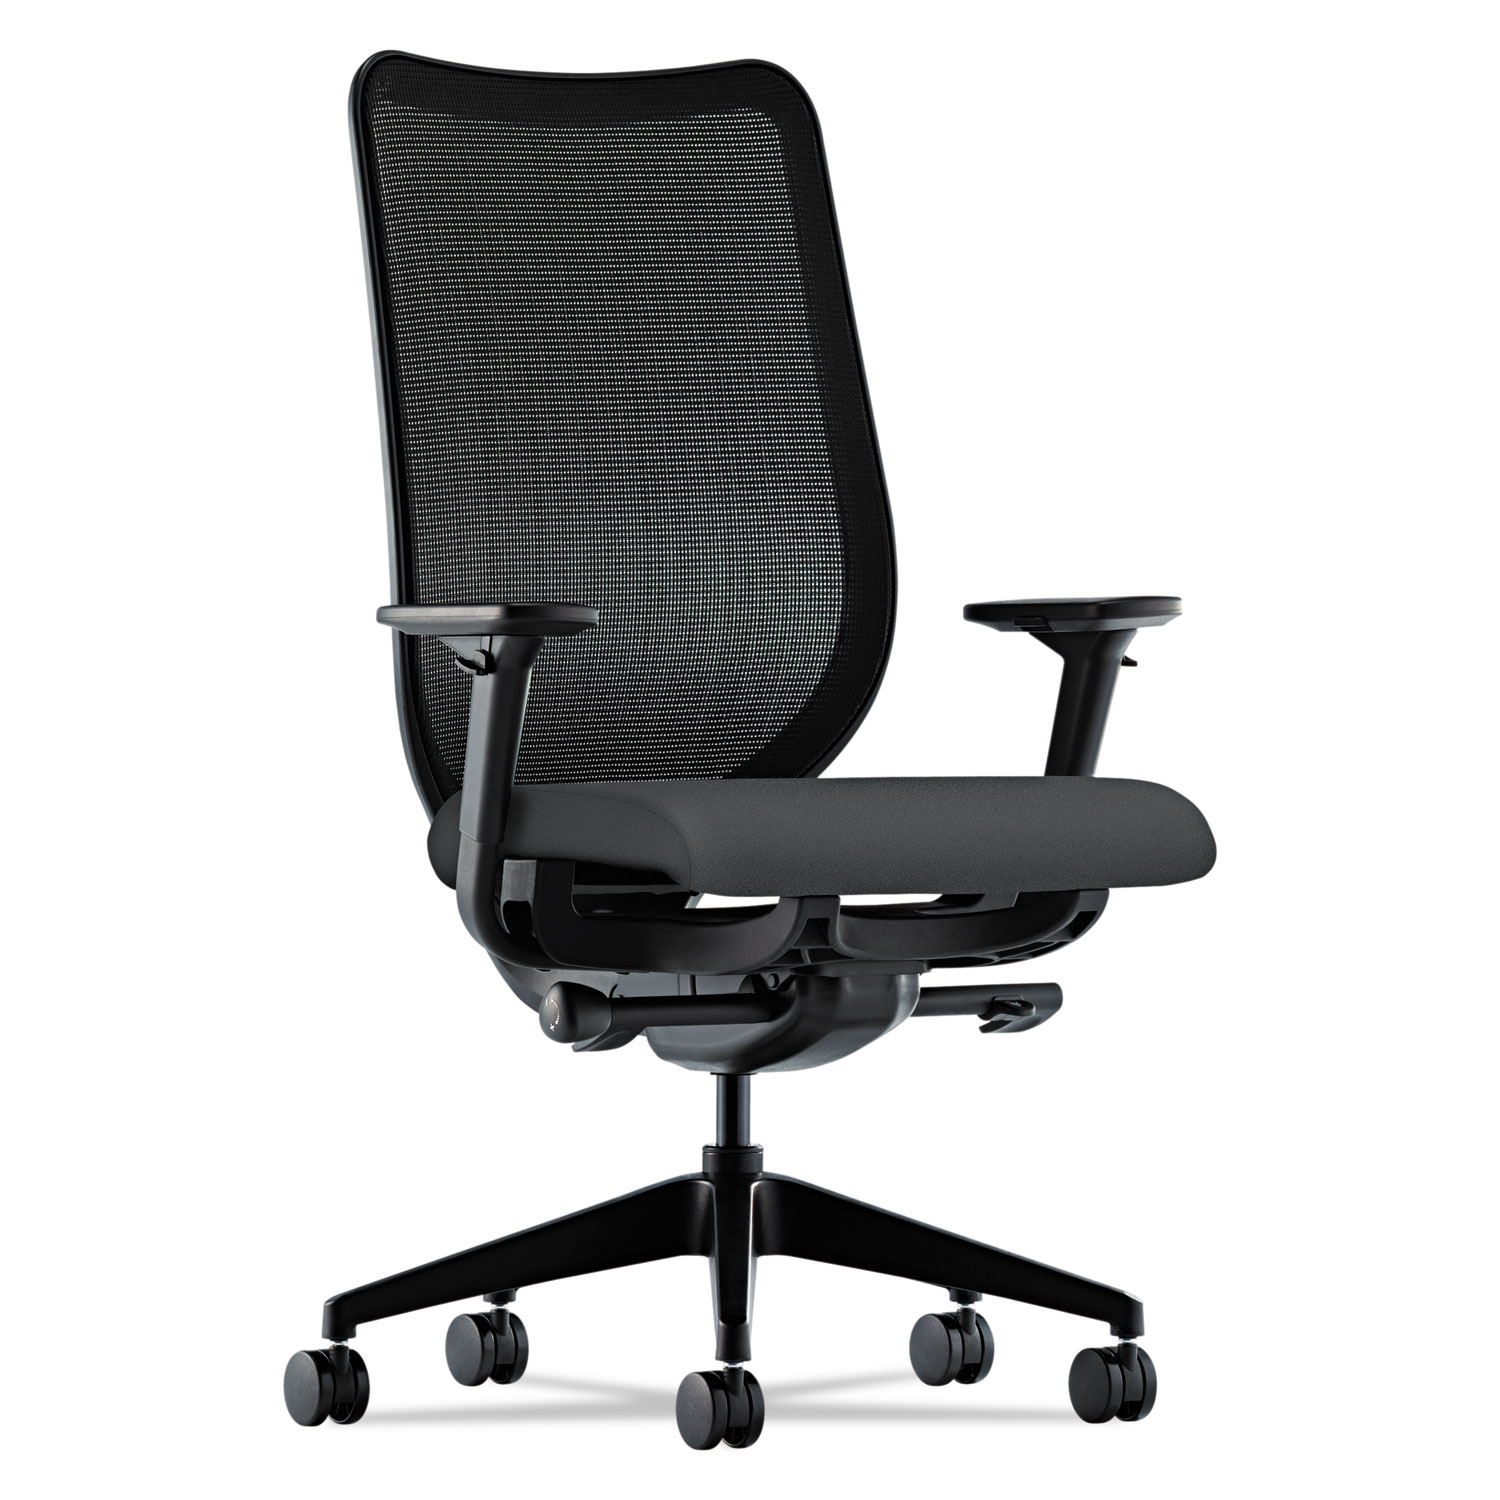 Nucleus Series Work Chair, Black ilira-stretch M4 Back, Iron Ore Seat